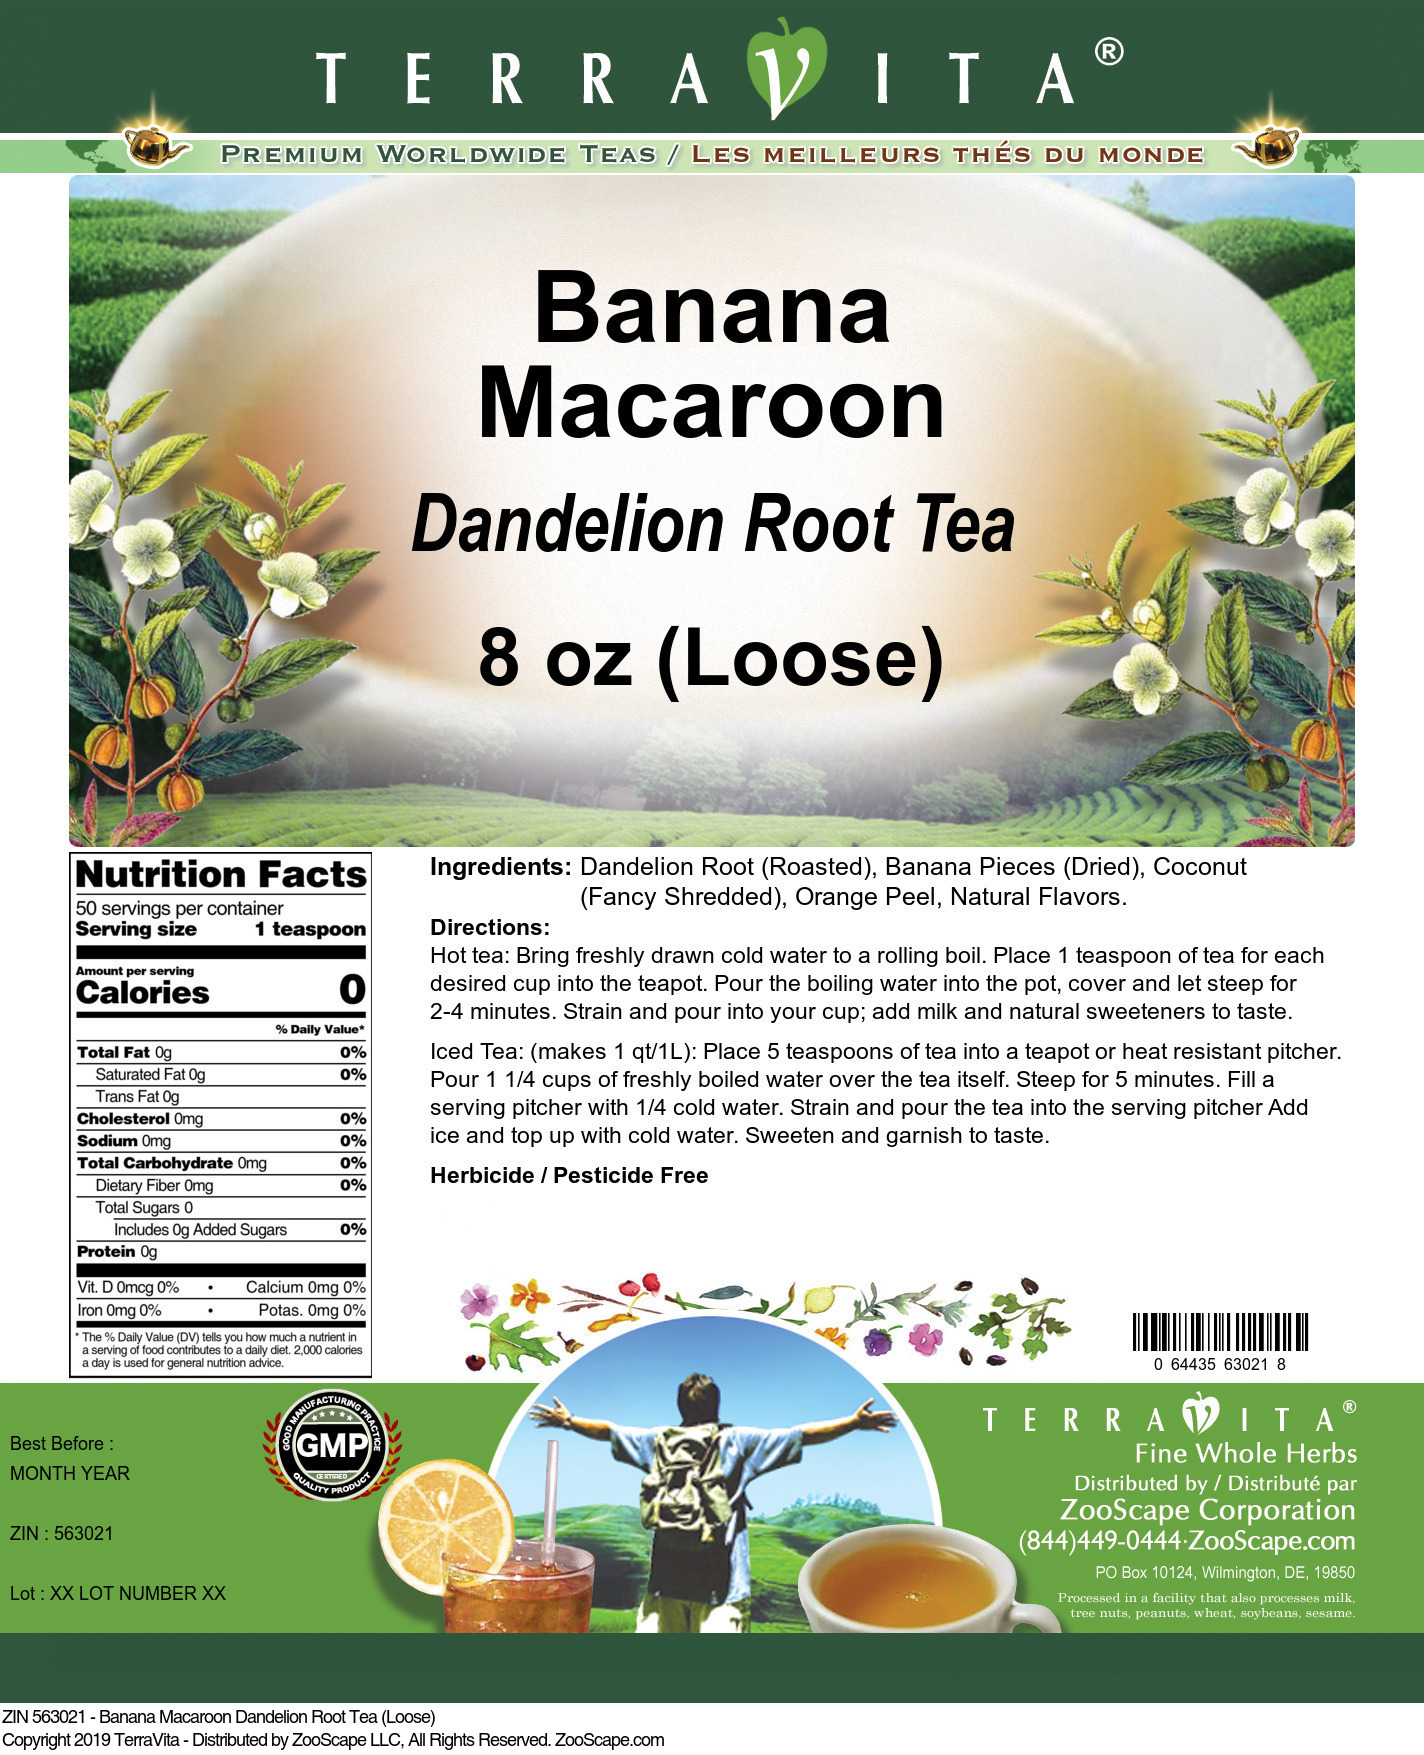 Banana Macaroon Dandelion Root Tea (Loose) - Label